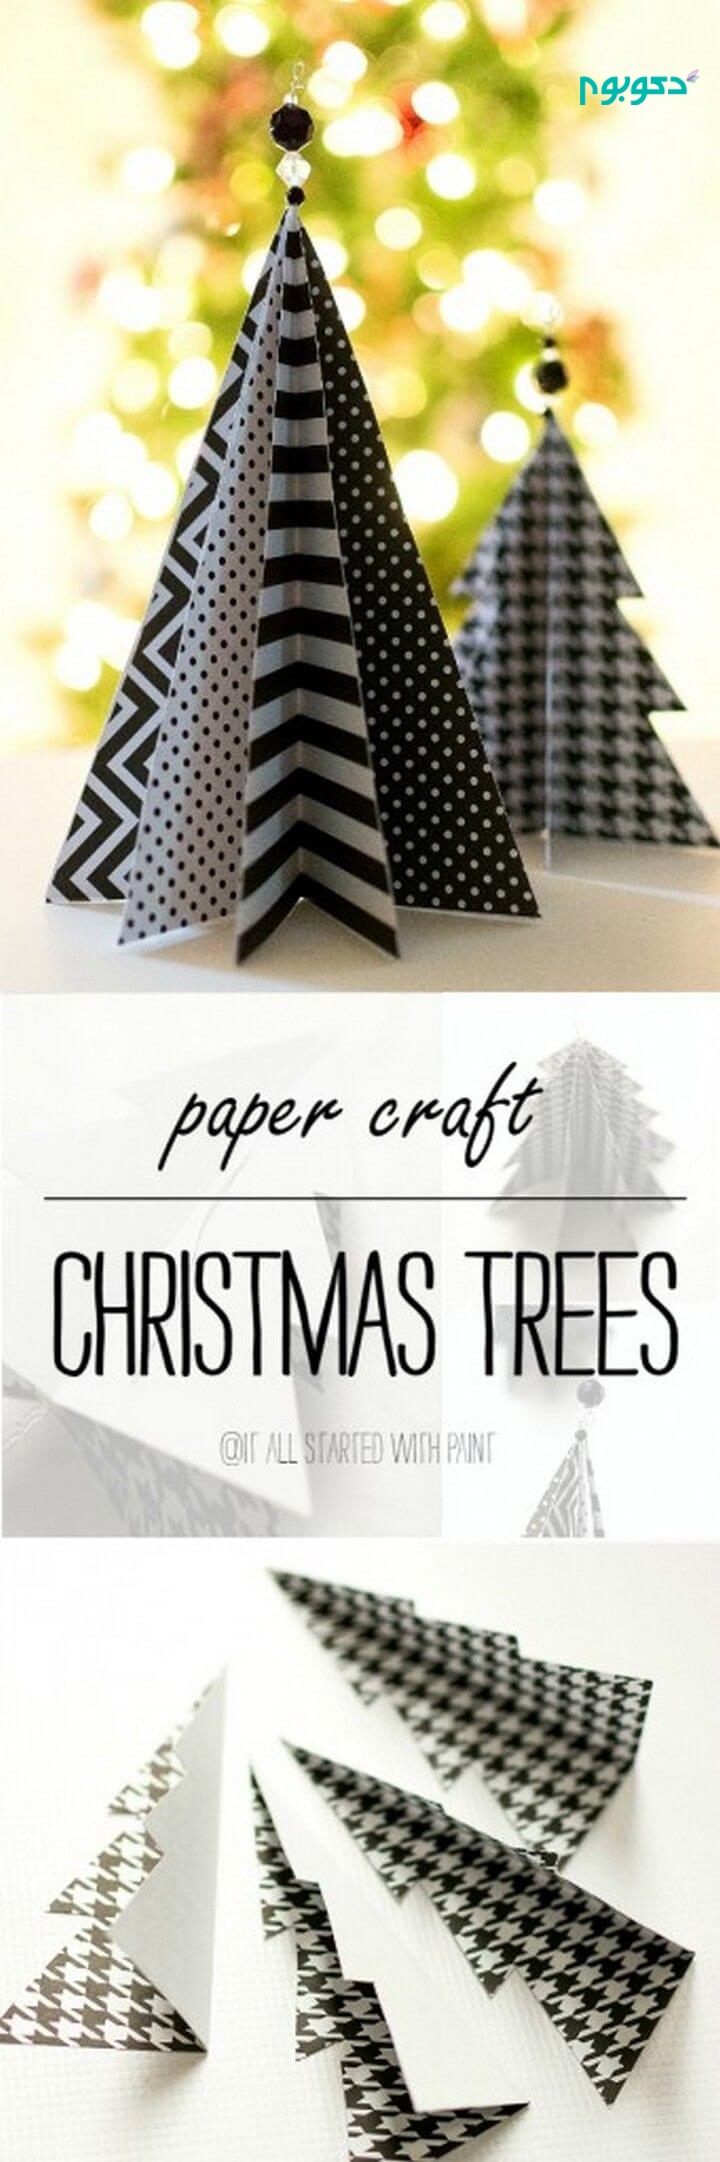 22-paper-decor-crafts-ideas-homebnc.jpg